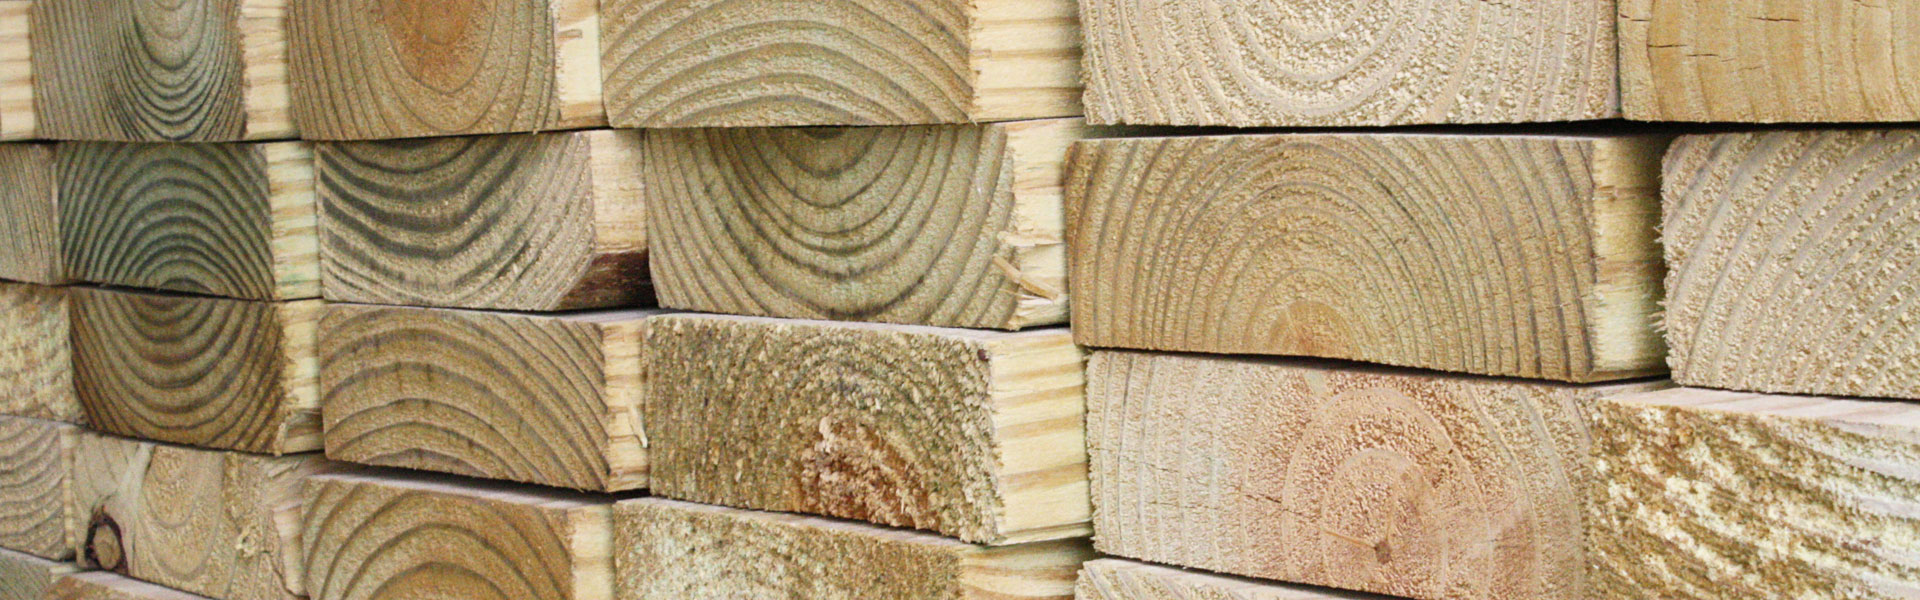 Lumber Supplies Minooka